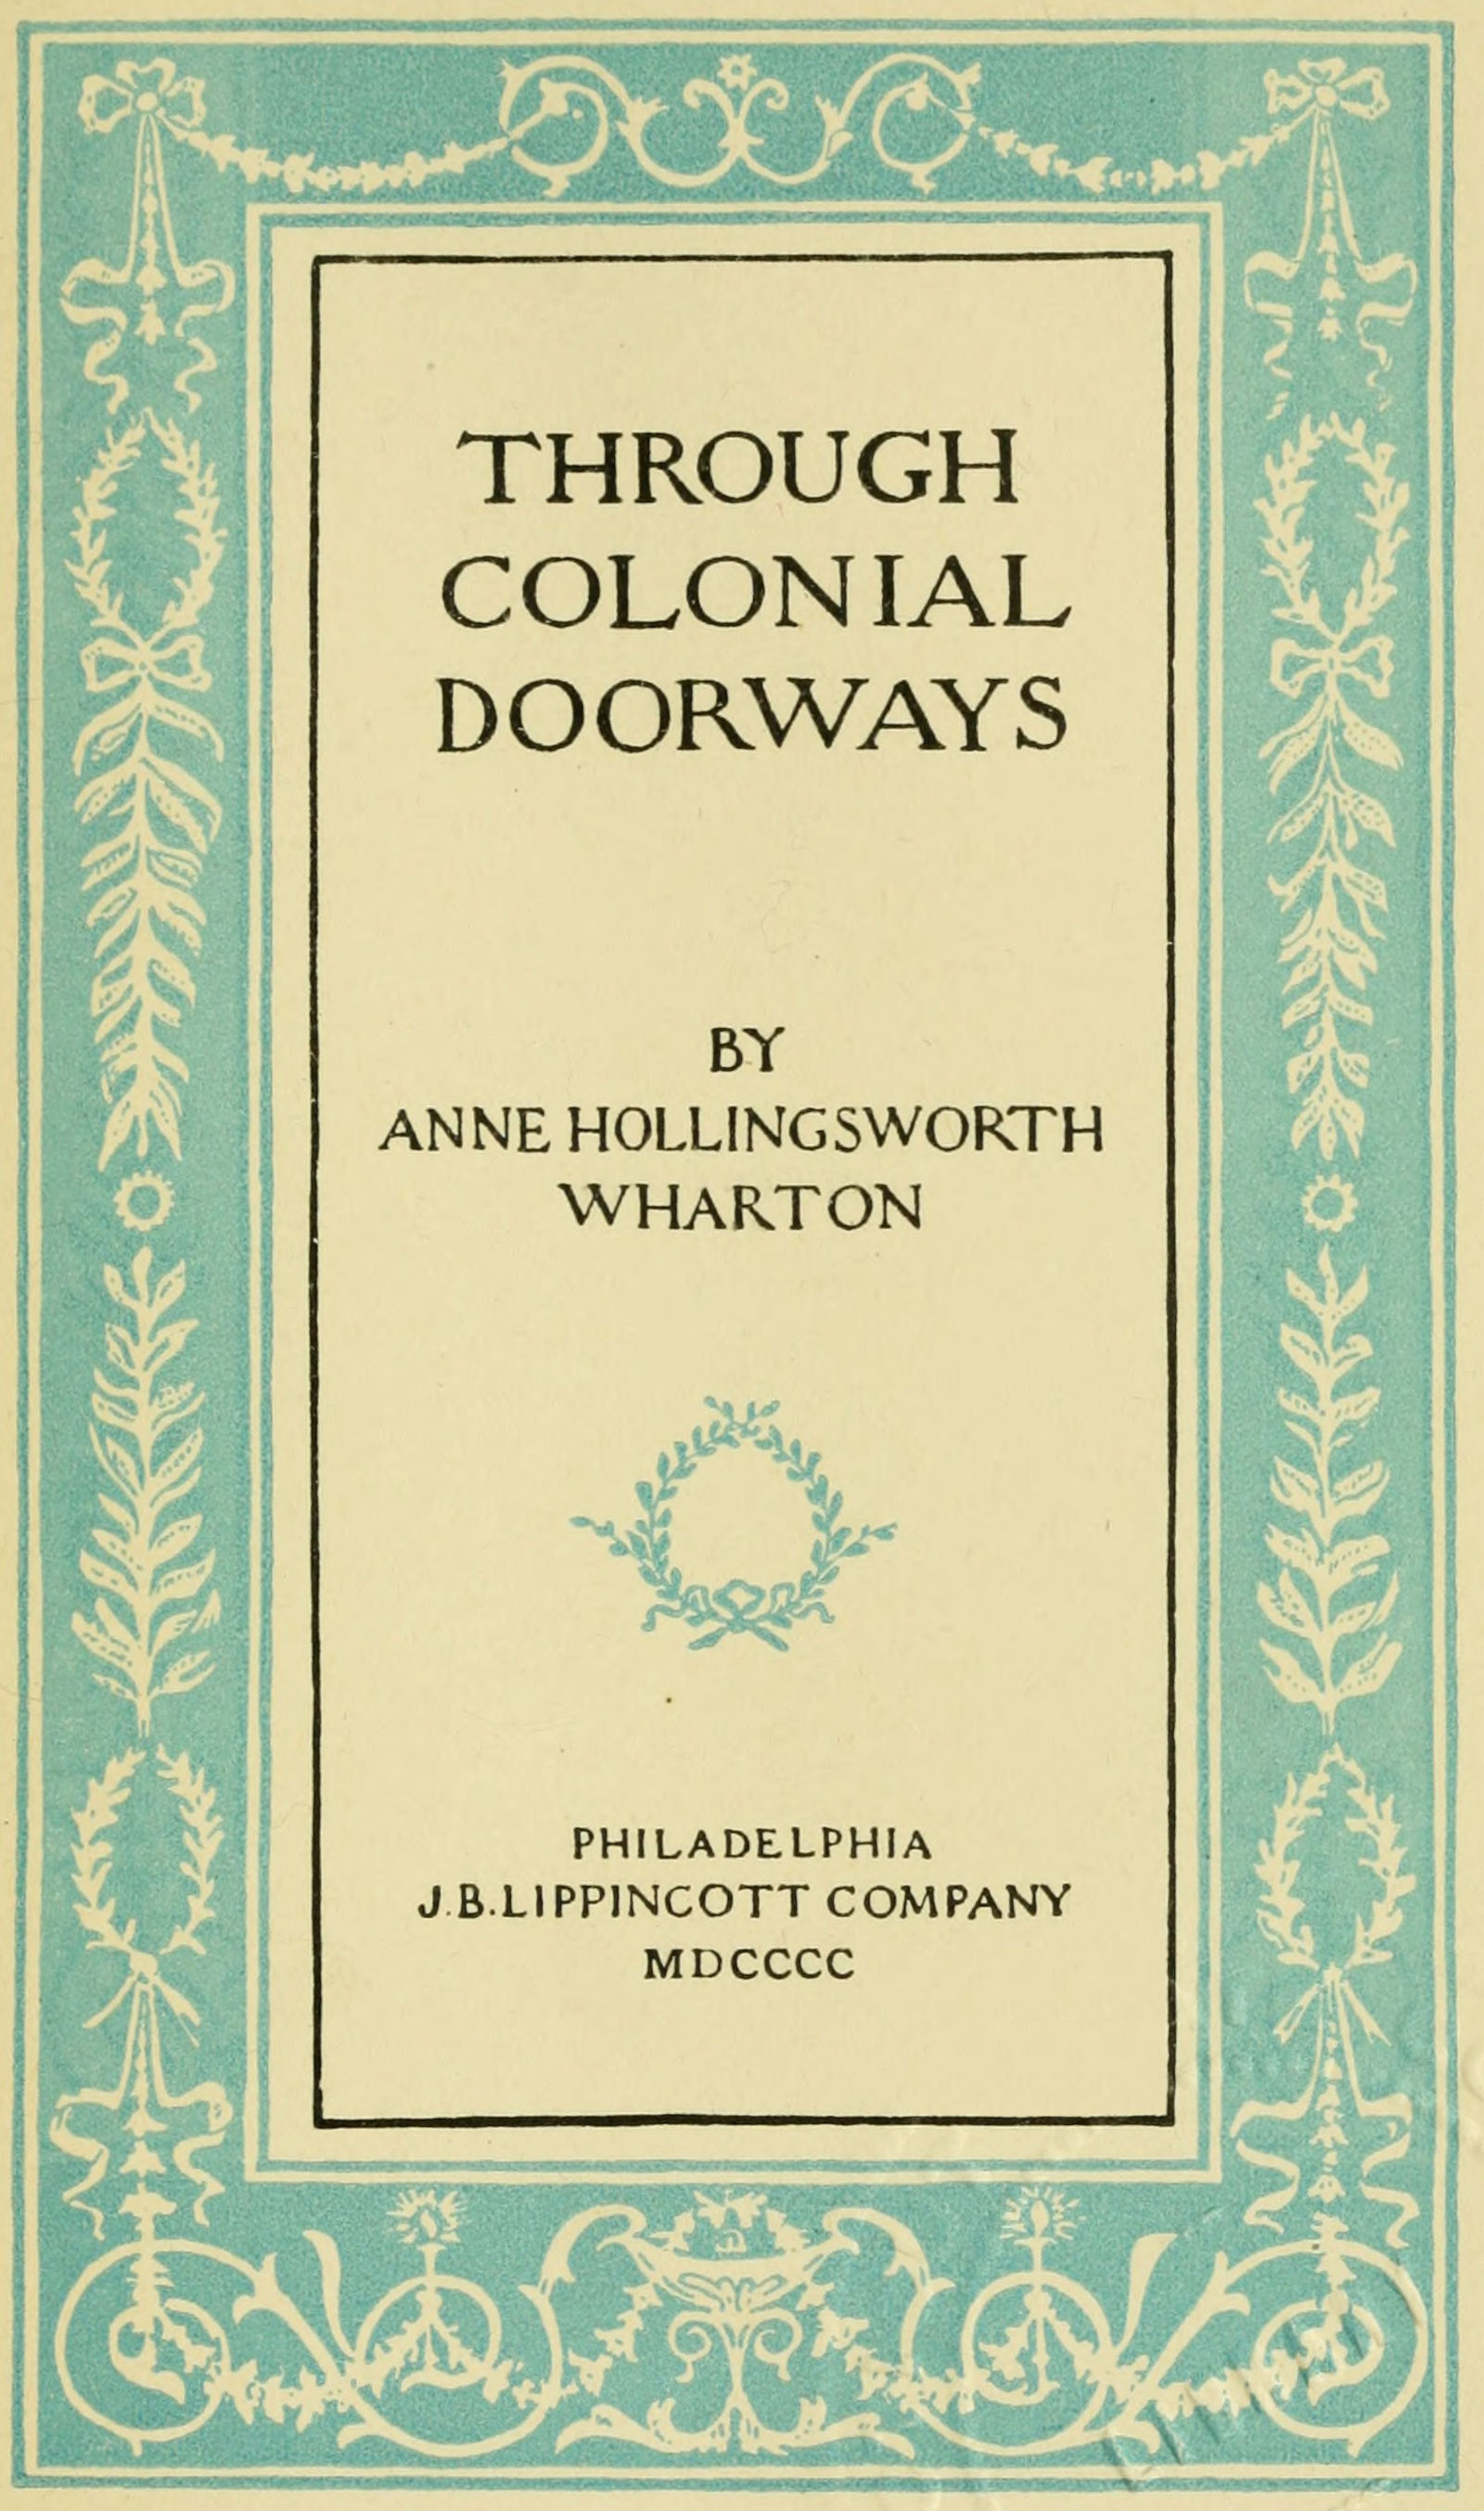 Through Colonial Doorways by Anne Hollingsworth Wharton